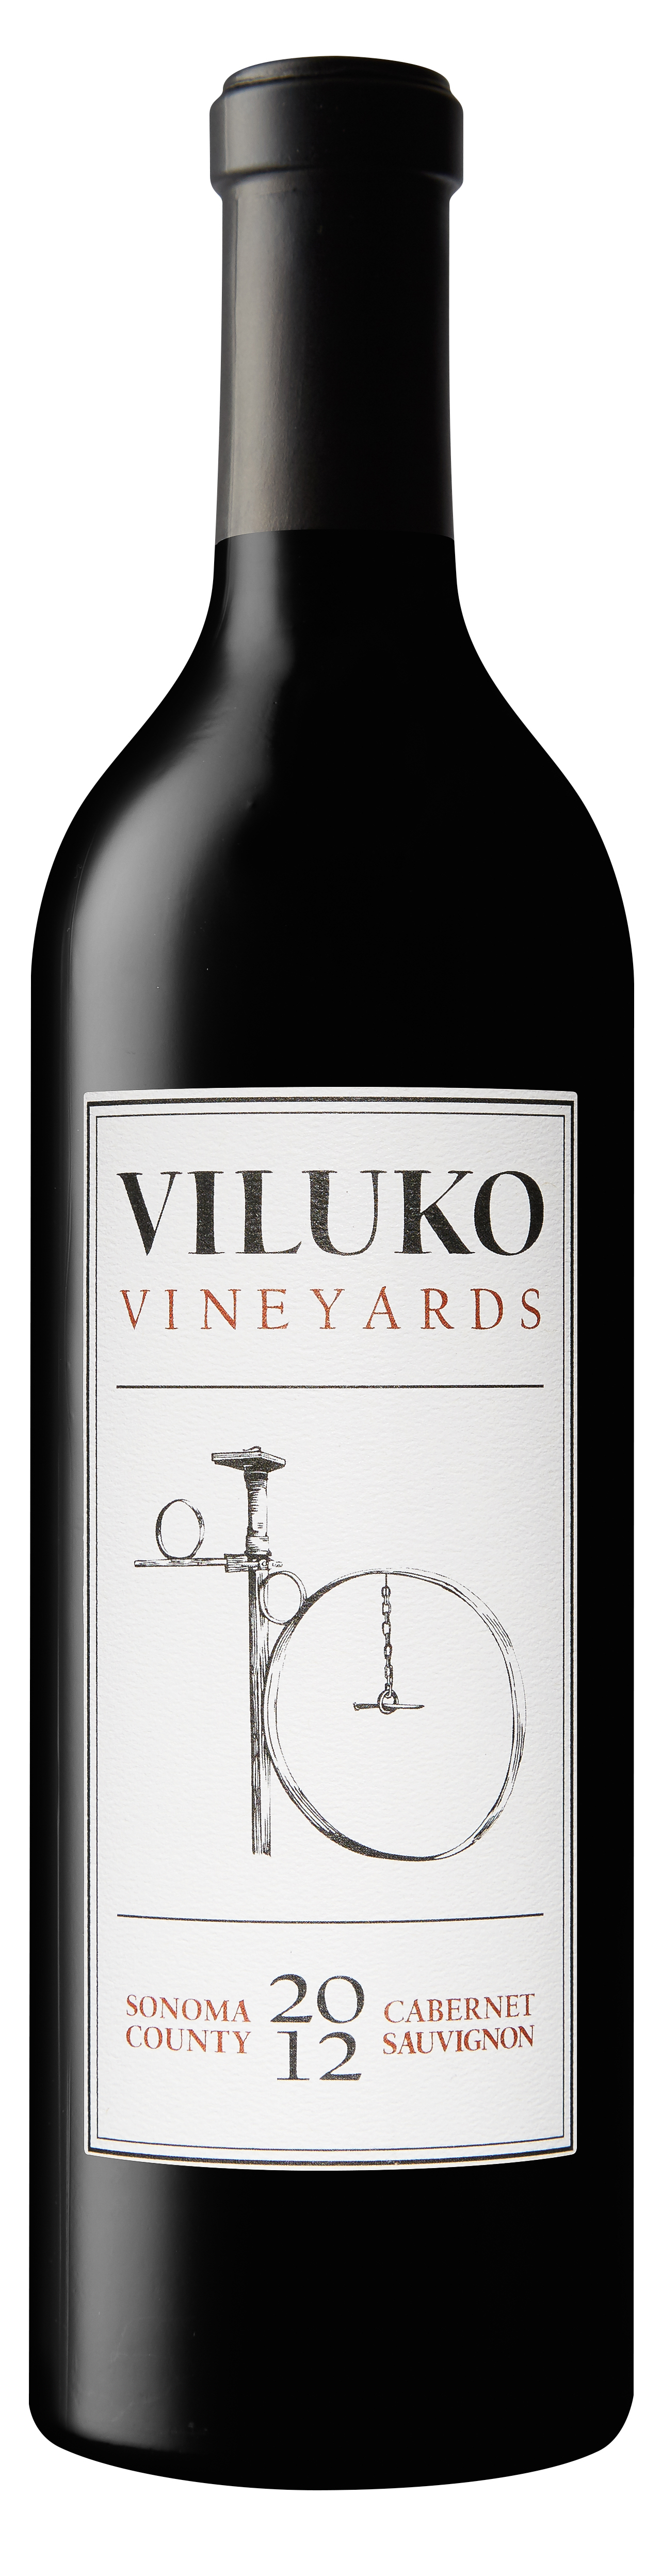 Product Image for 2012 Viluko Vineyards Cabernet Sauvignon